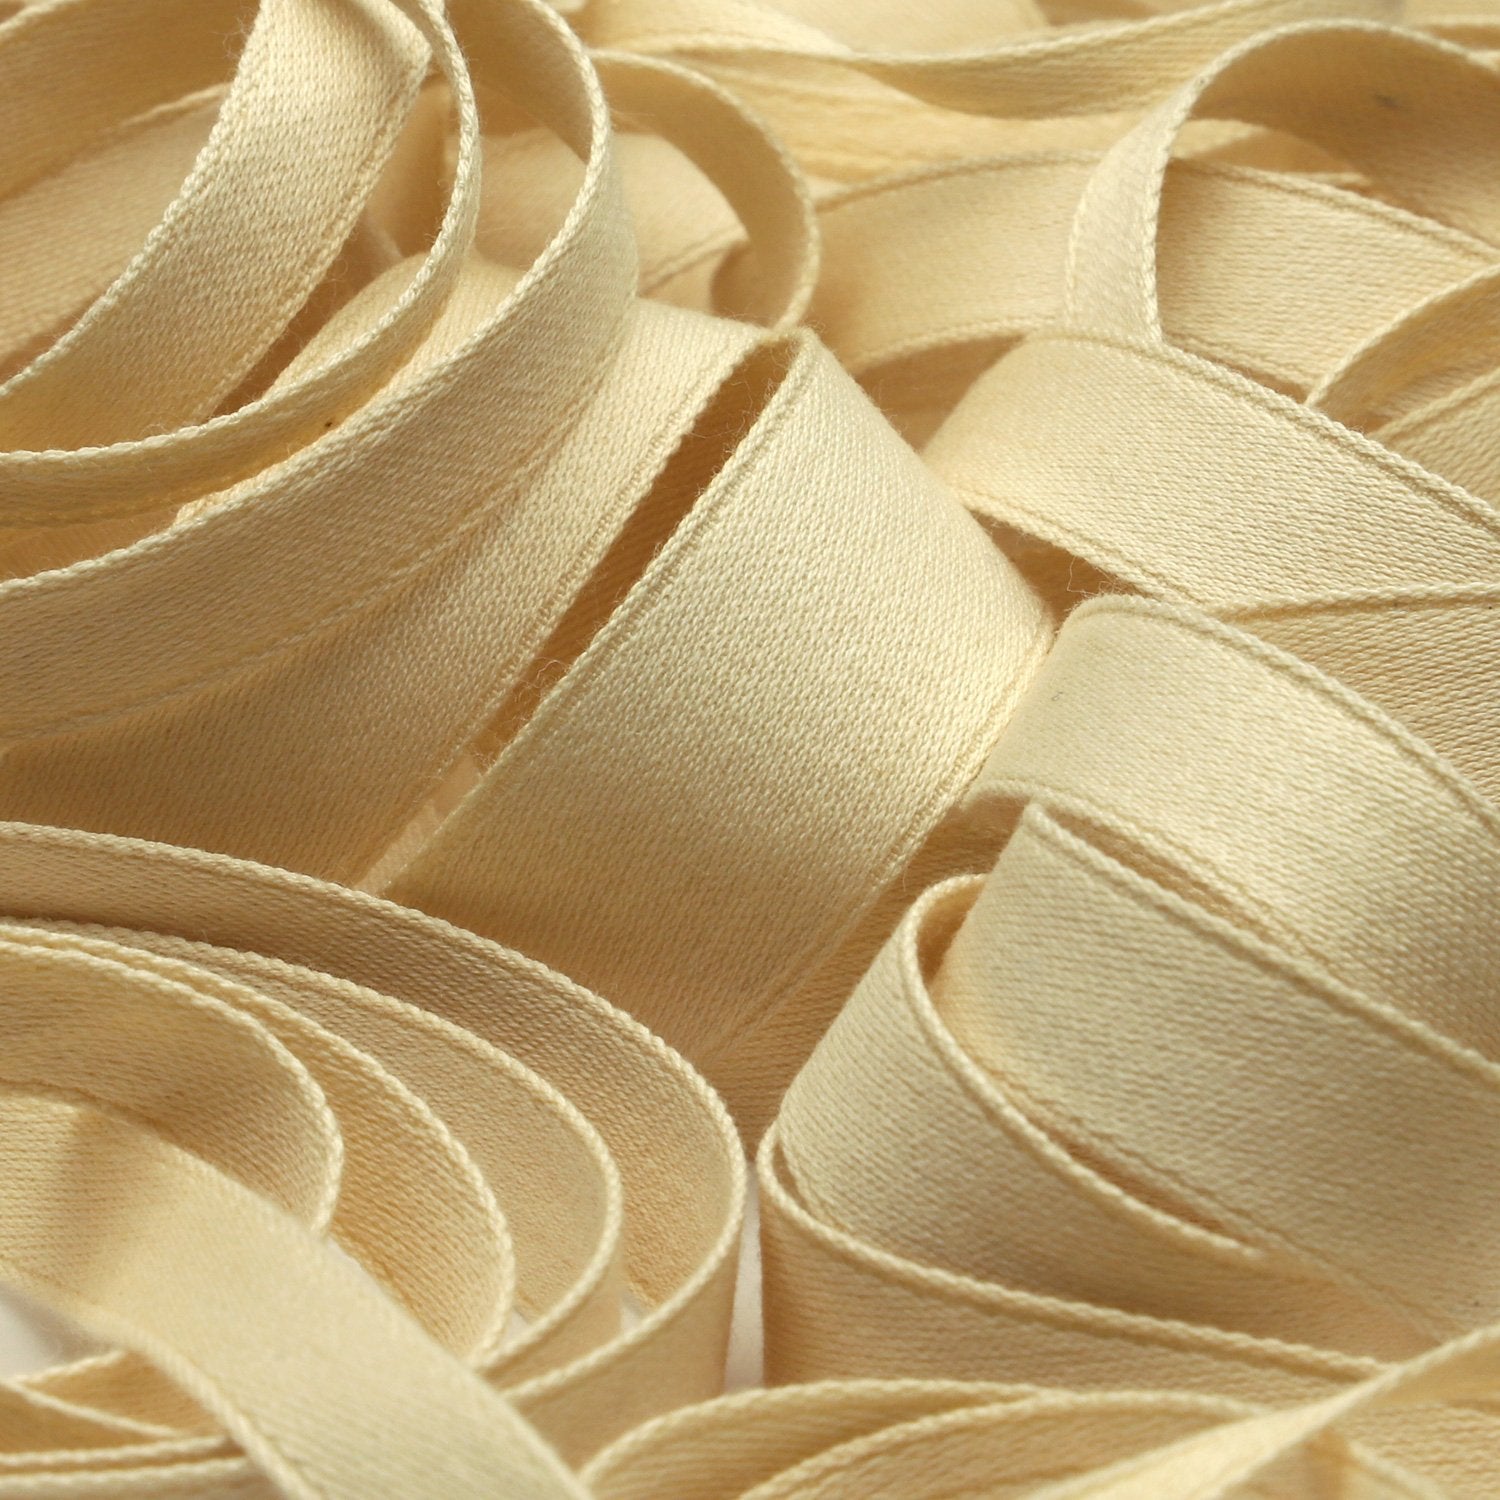 FUJIYAMA RIBBON [Wholesale] Organic Cotton Double-Face Satin Ribbon 18mm Ecru 30 Meters Roll